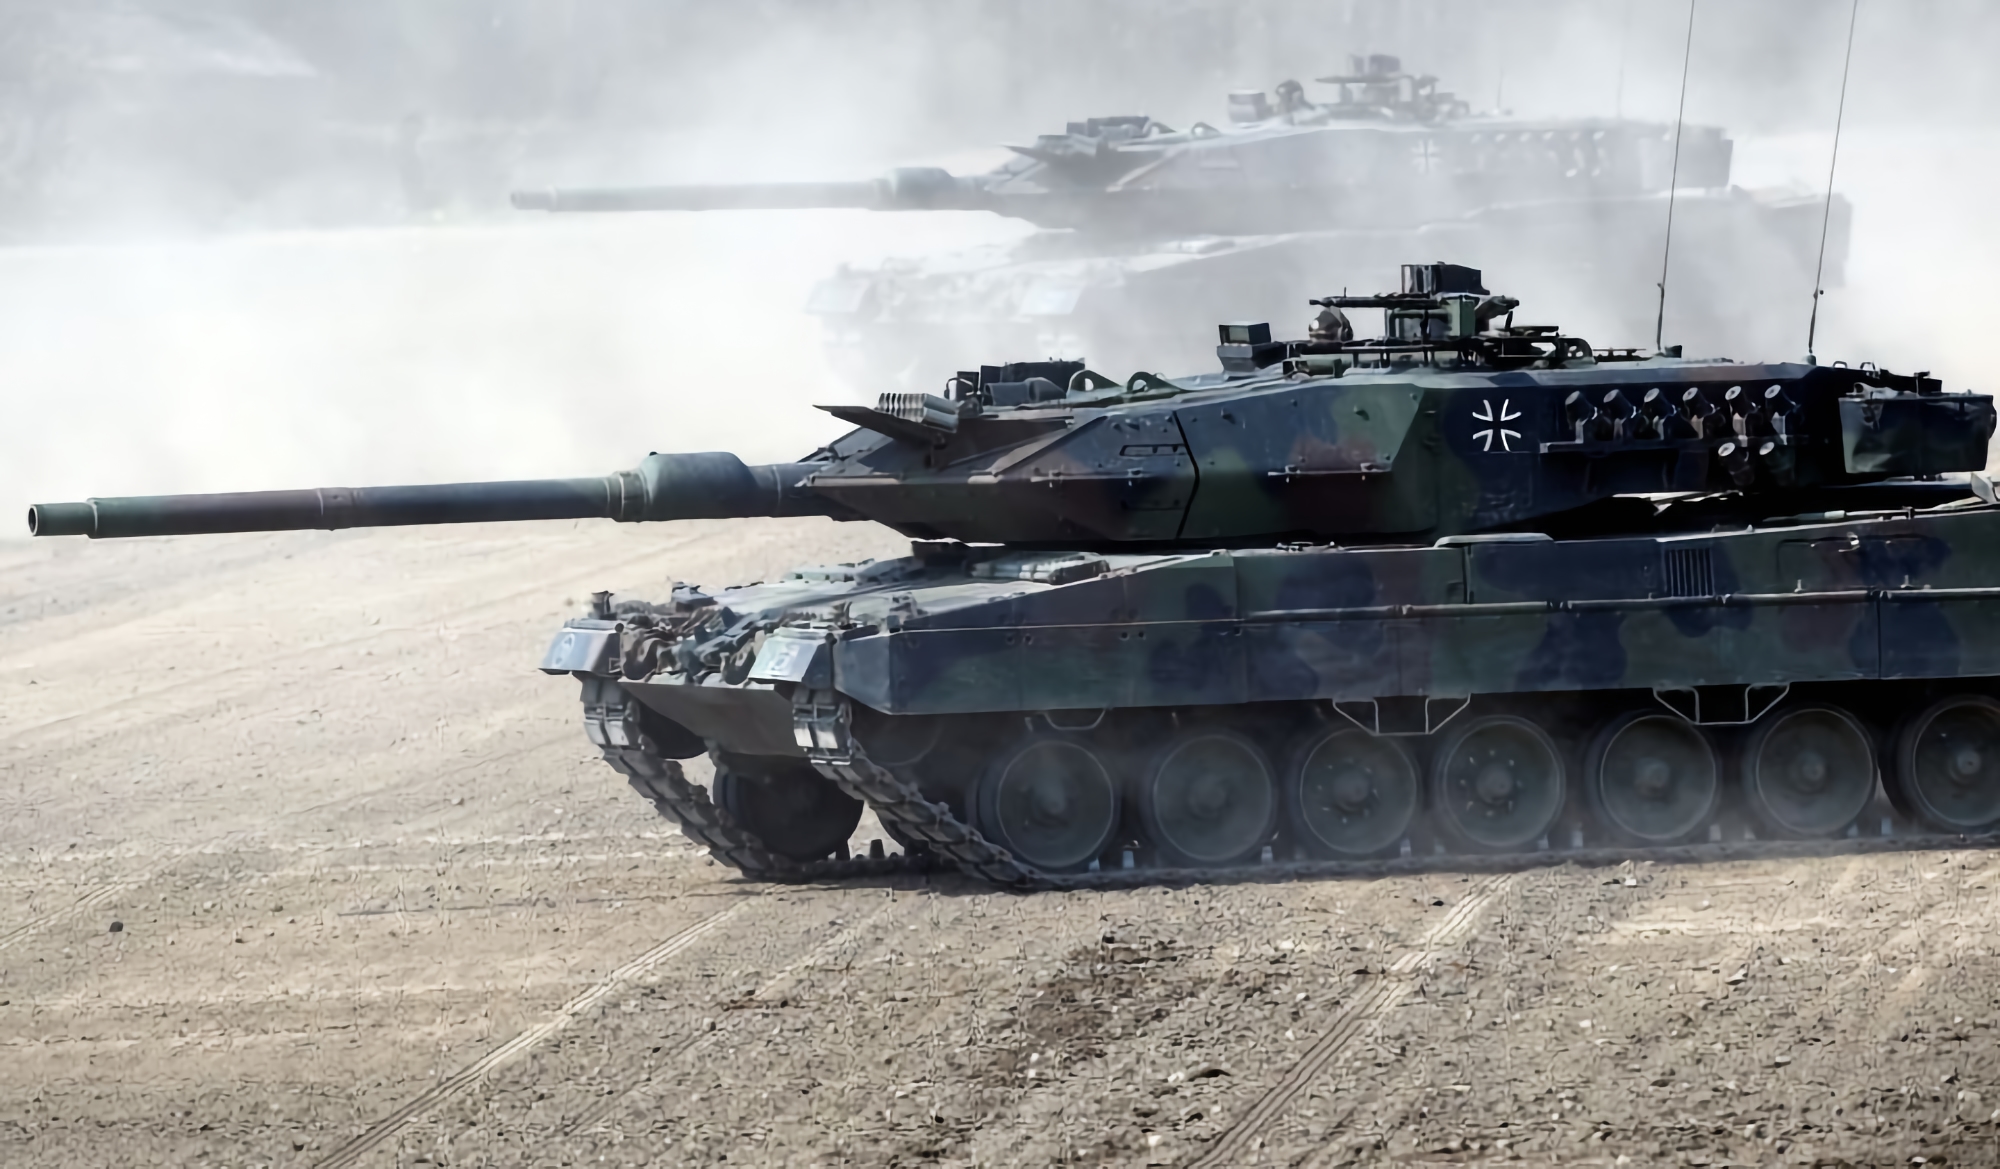 Reznikov: L'Ucraina riceverà carri armati Leopard, ma per ora saranno usati per addestrare soldati